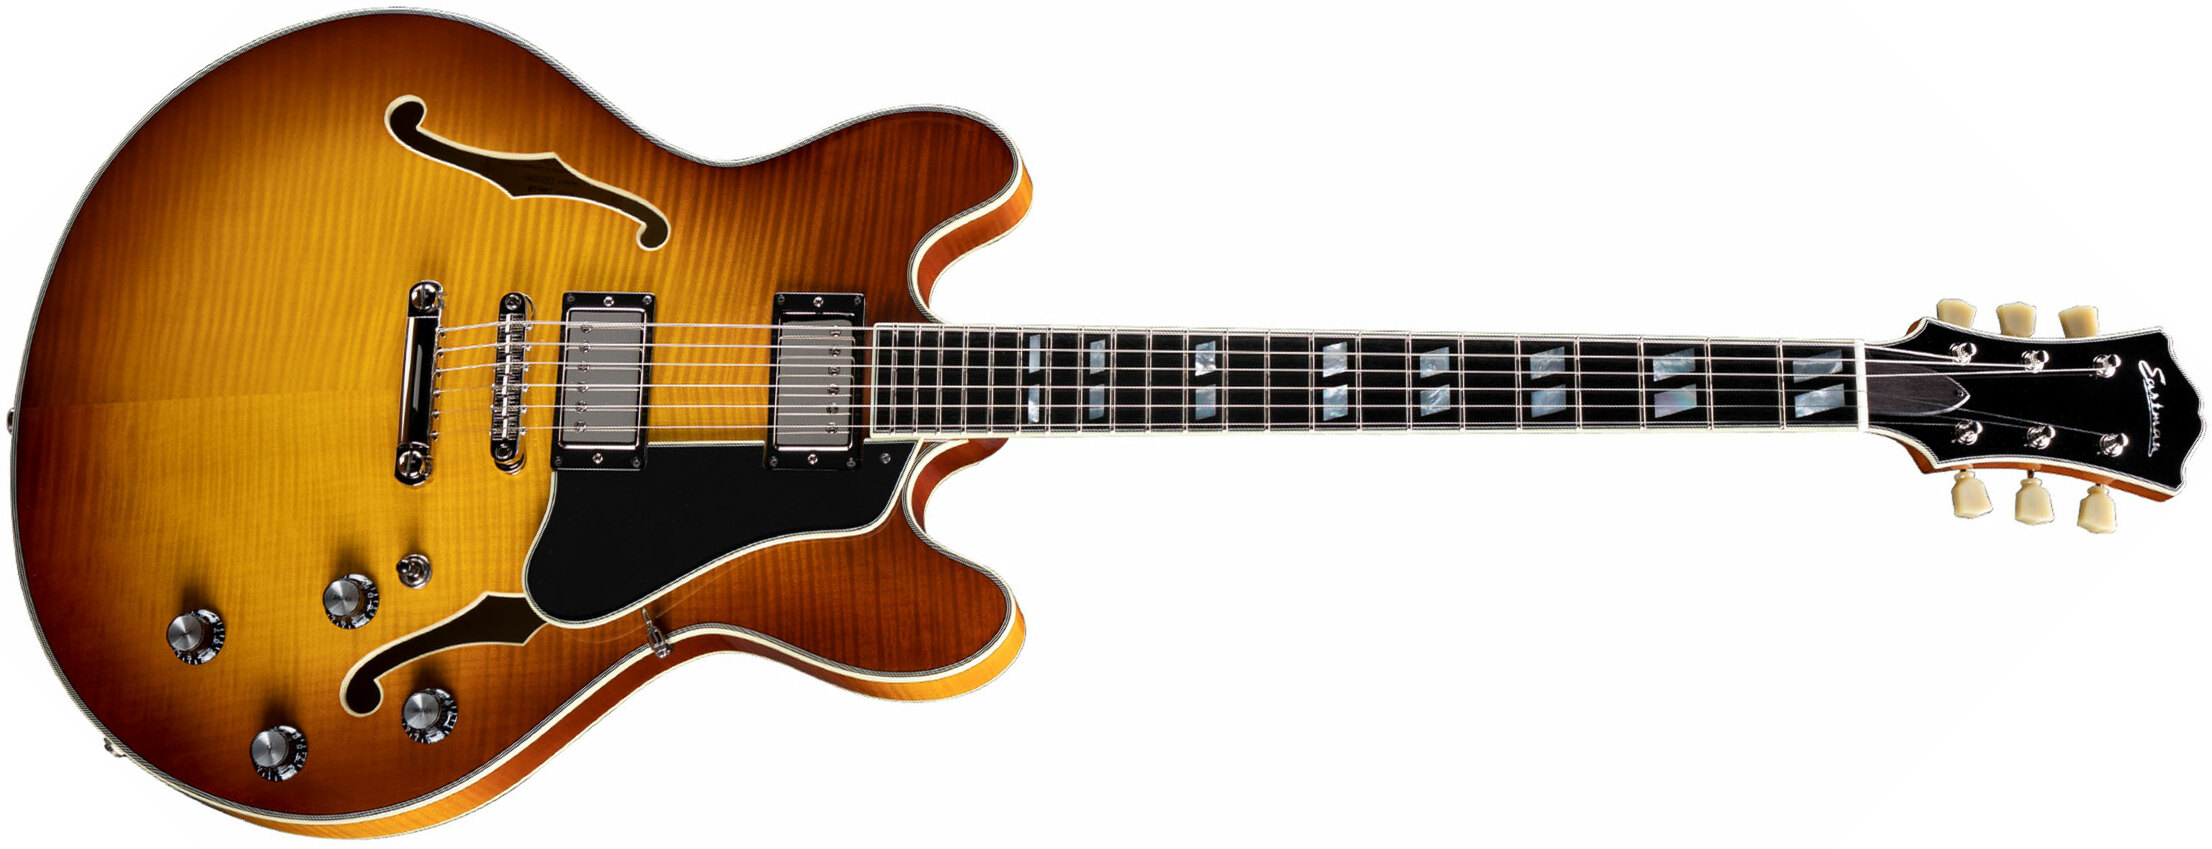 Eastman T486 Thinline Laminate Tout Erable Hh Seymour Duncan Ht Eb - Goldburst - Semi hollow elektriche gitaar - Main picture